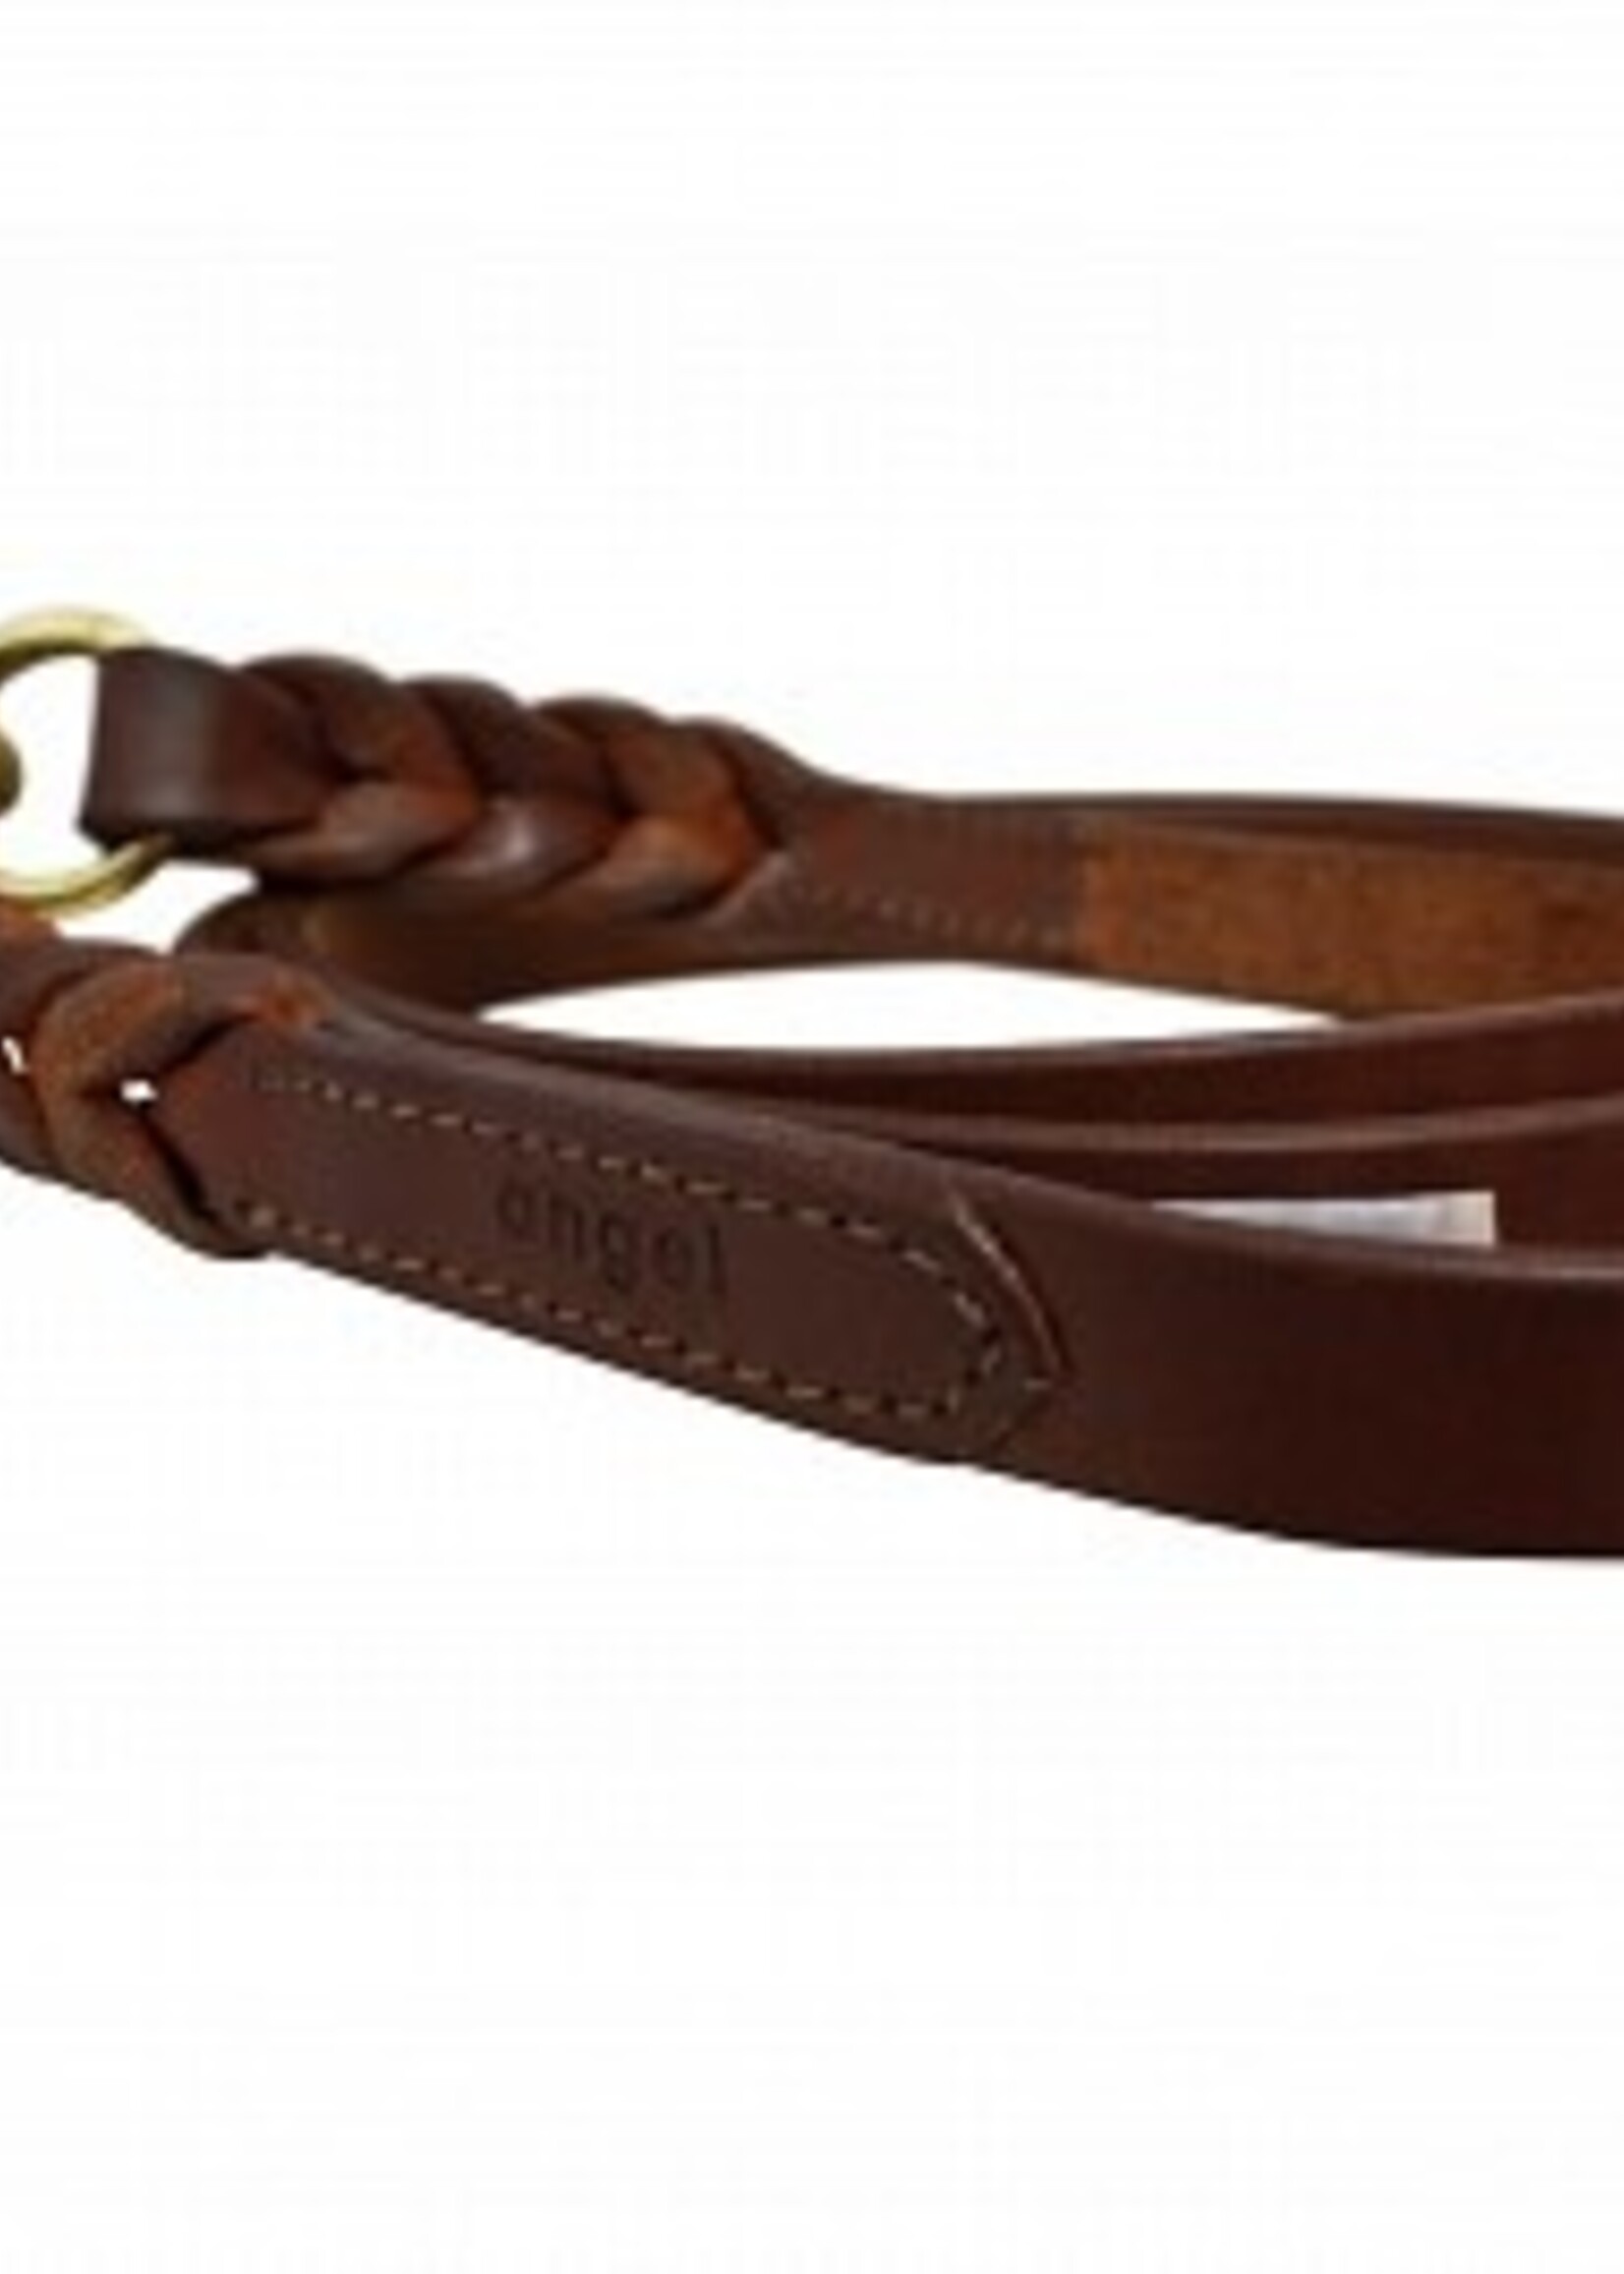 Braided Leather Leash Brown 6' x 1"